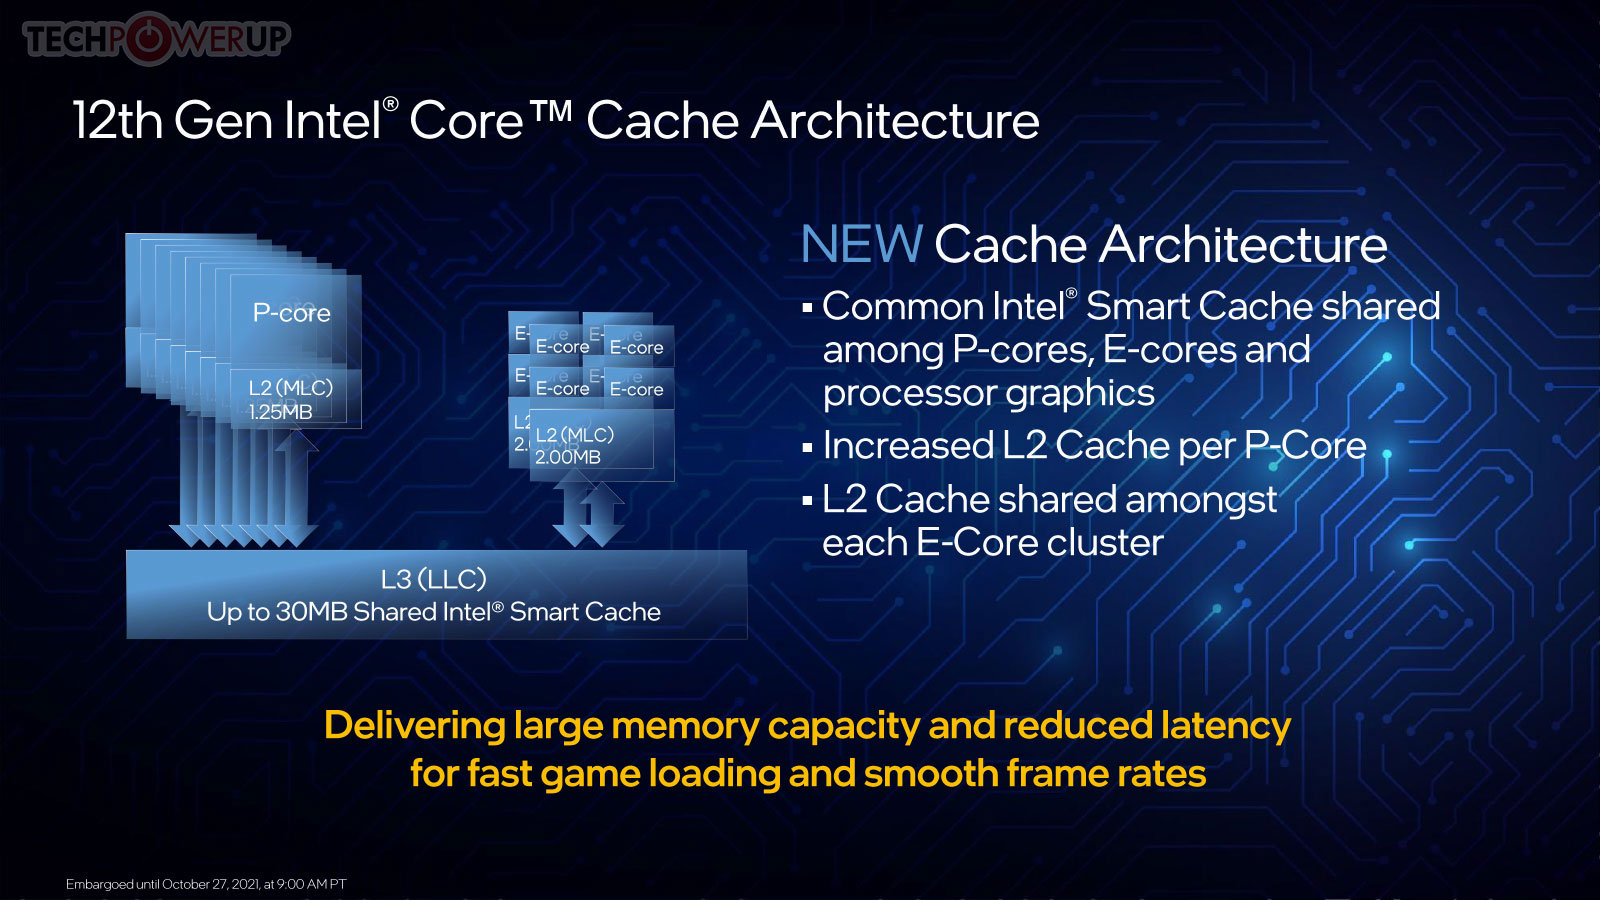 Intel Core i5-12600K review: The new mainstream CPU champ crushes